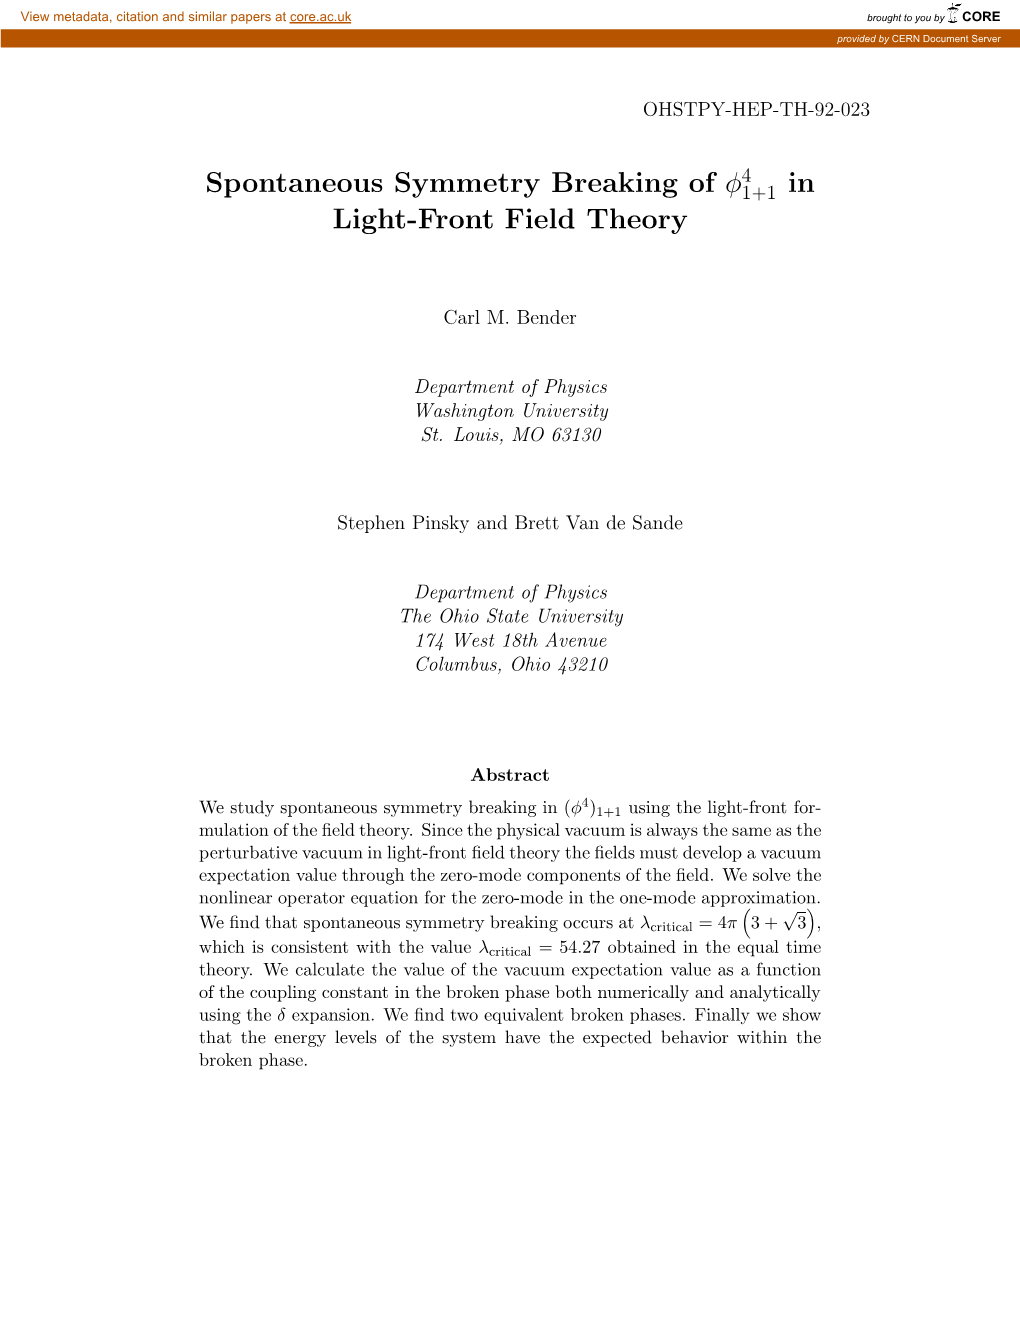 Spontaneous Symmetry Breaking of Φ4 in Light-Front Field Theory